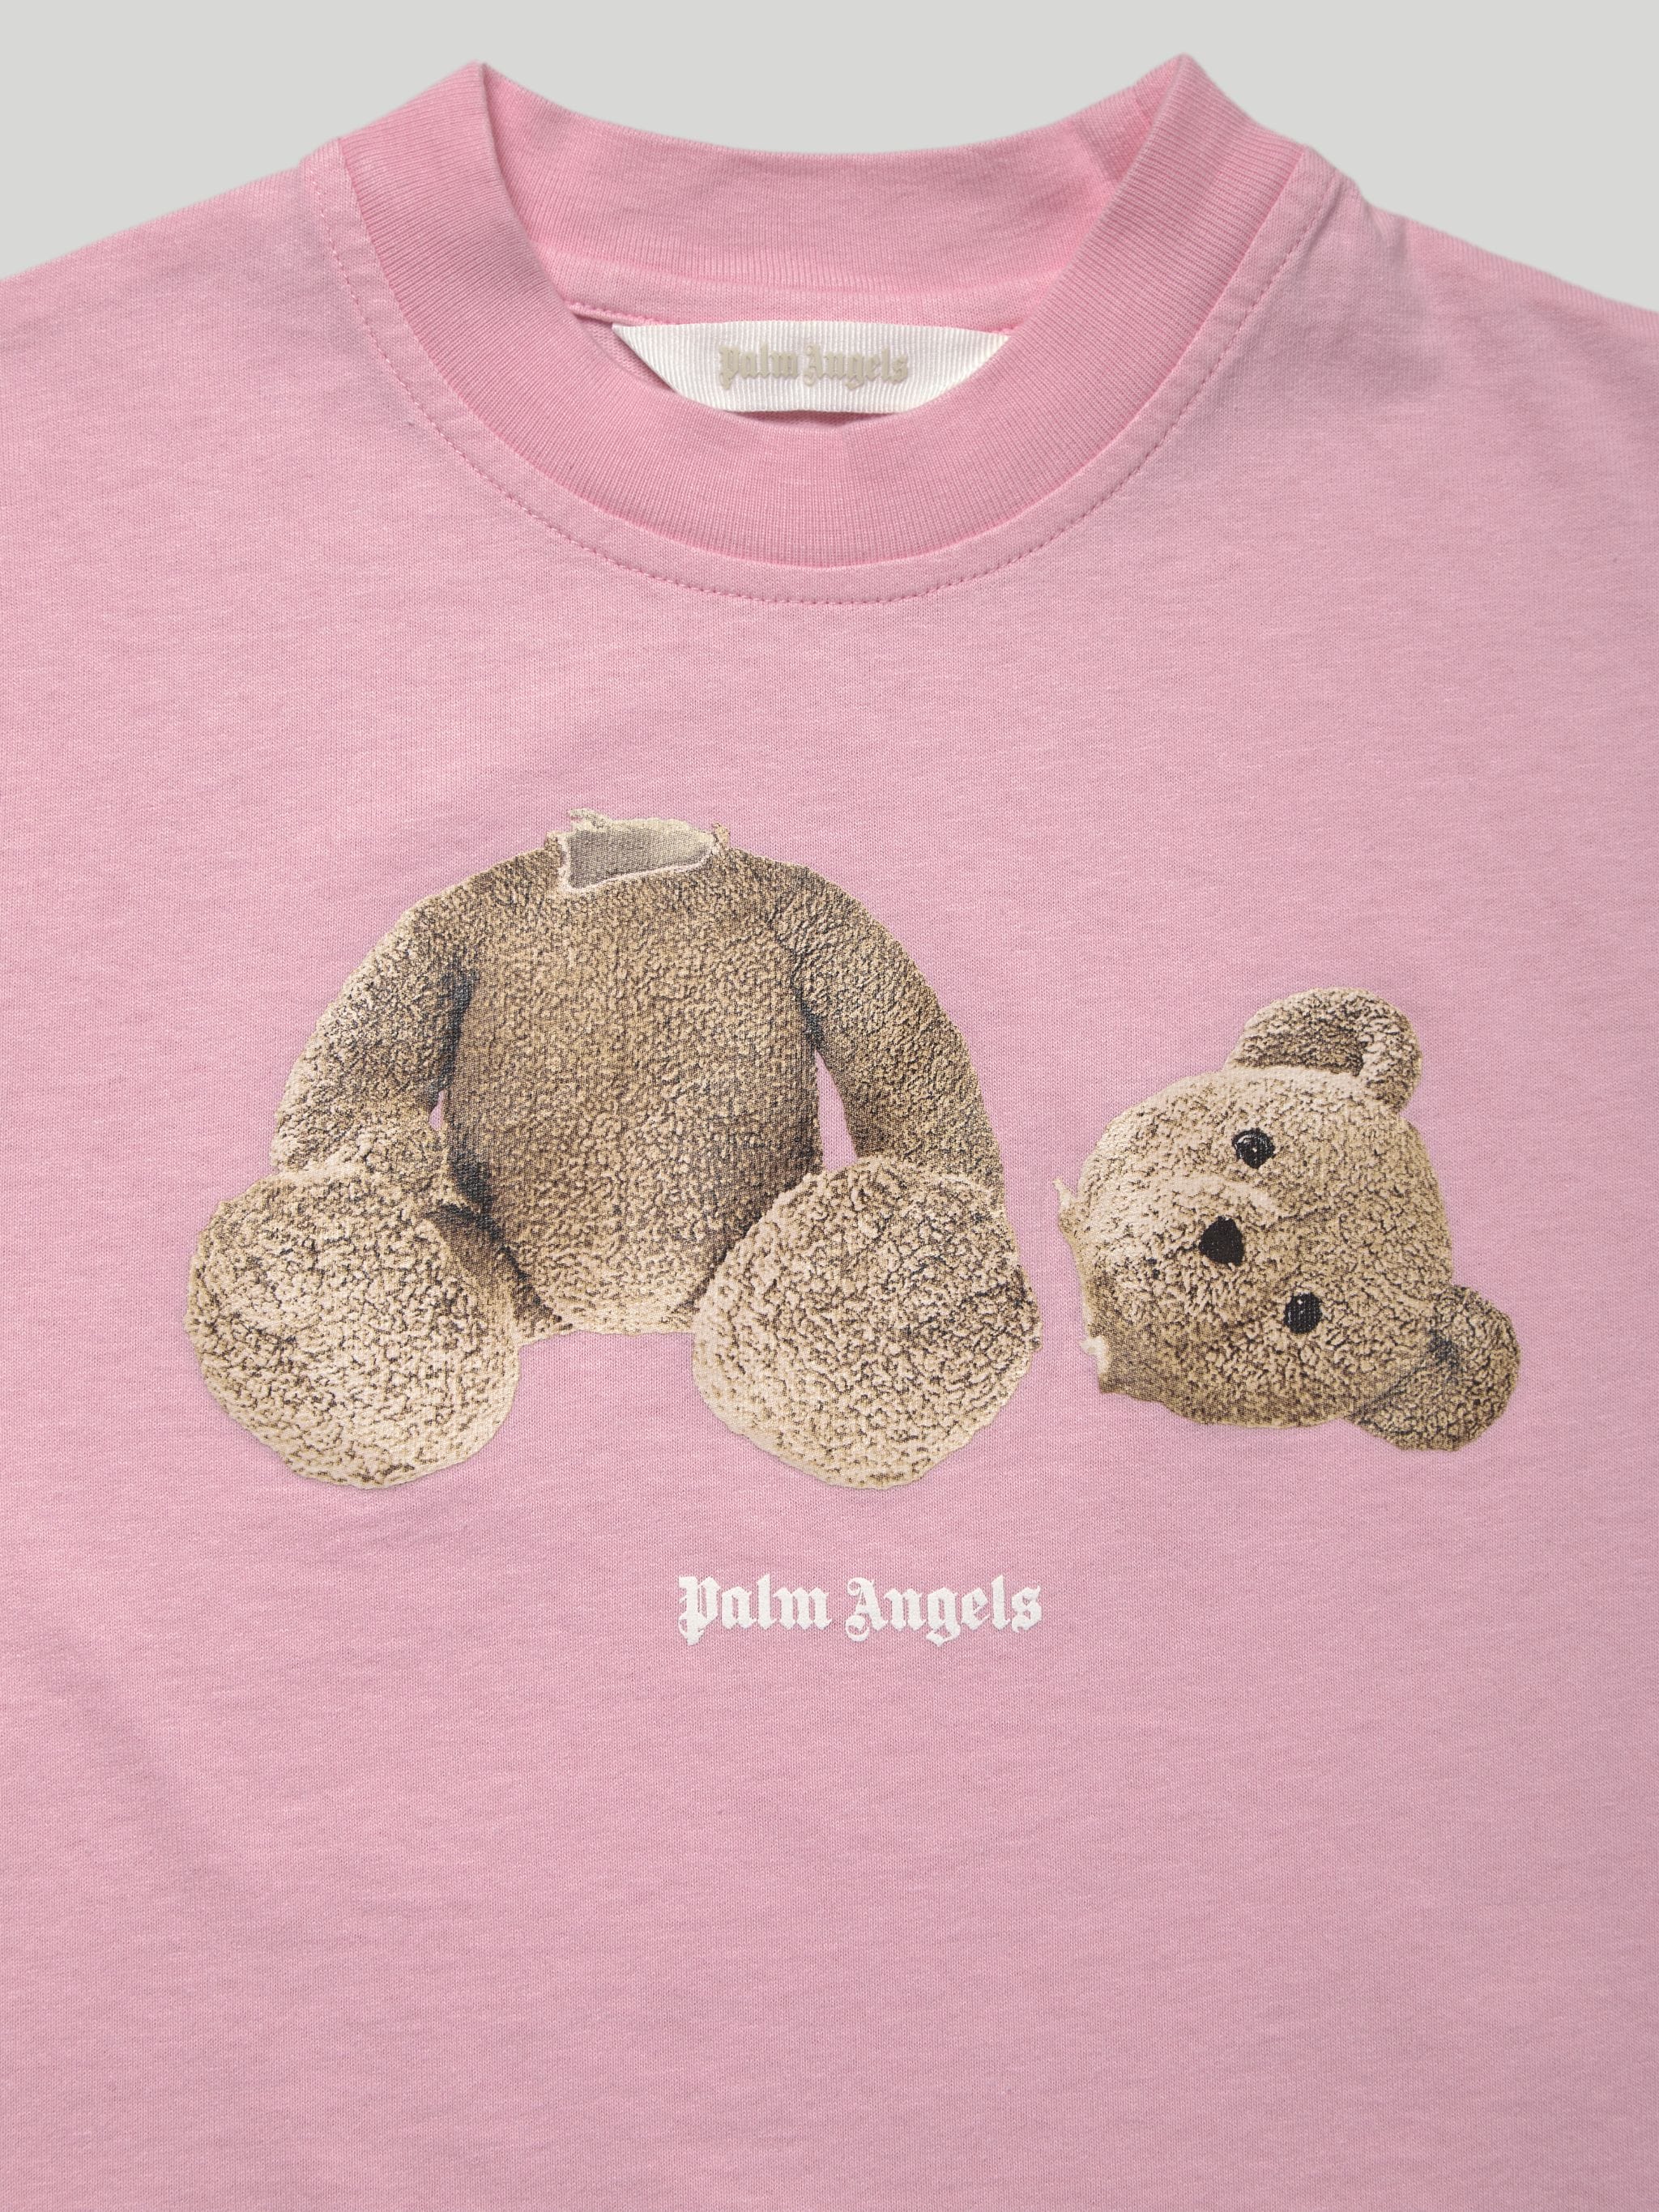 Paubaart Buy Palm Angels Bear Design T-Shirt Online India